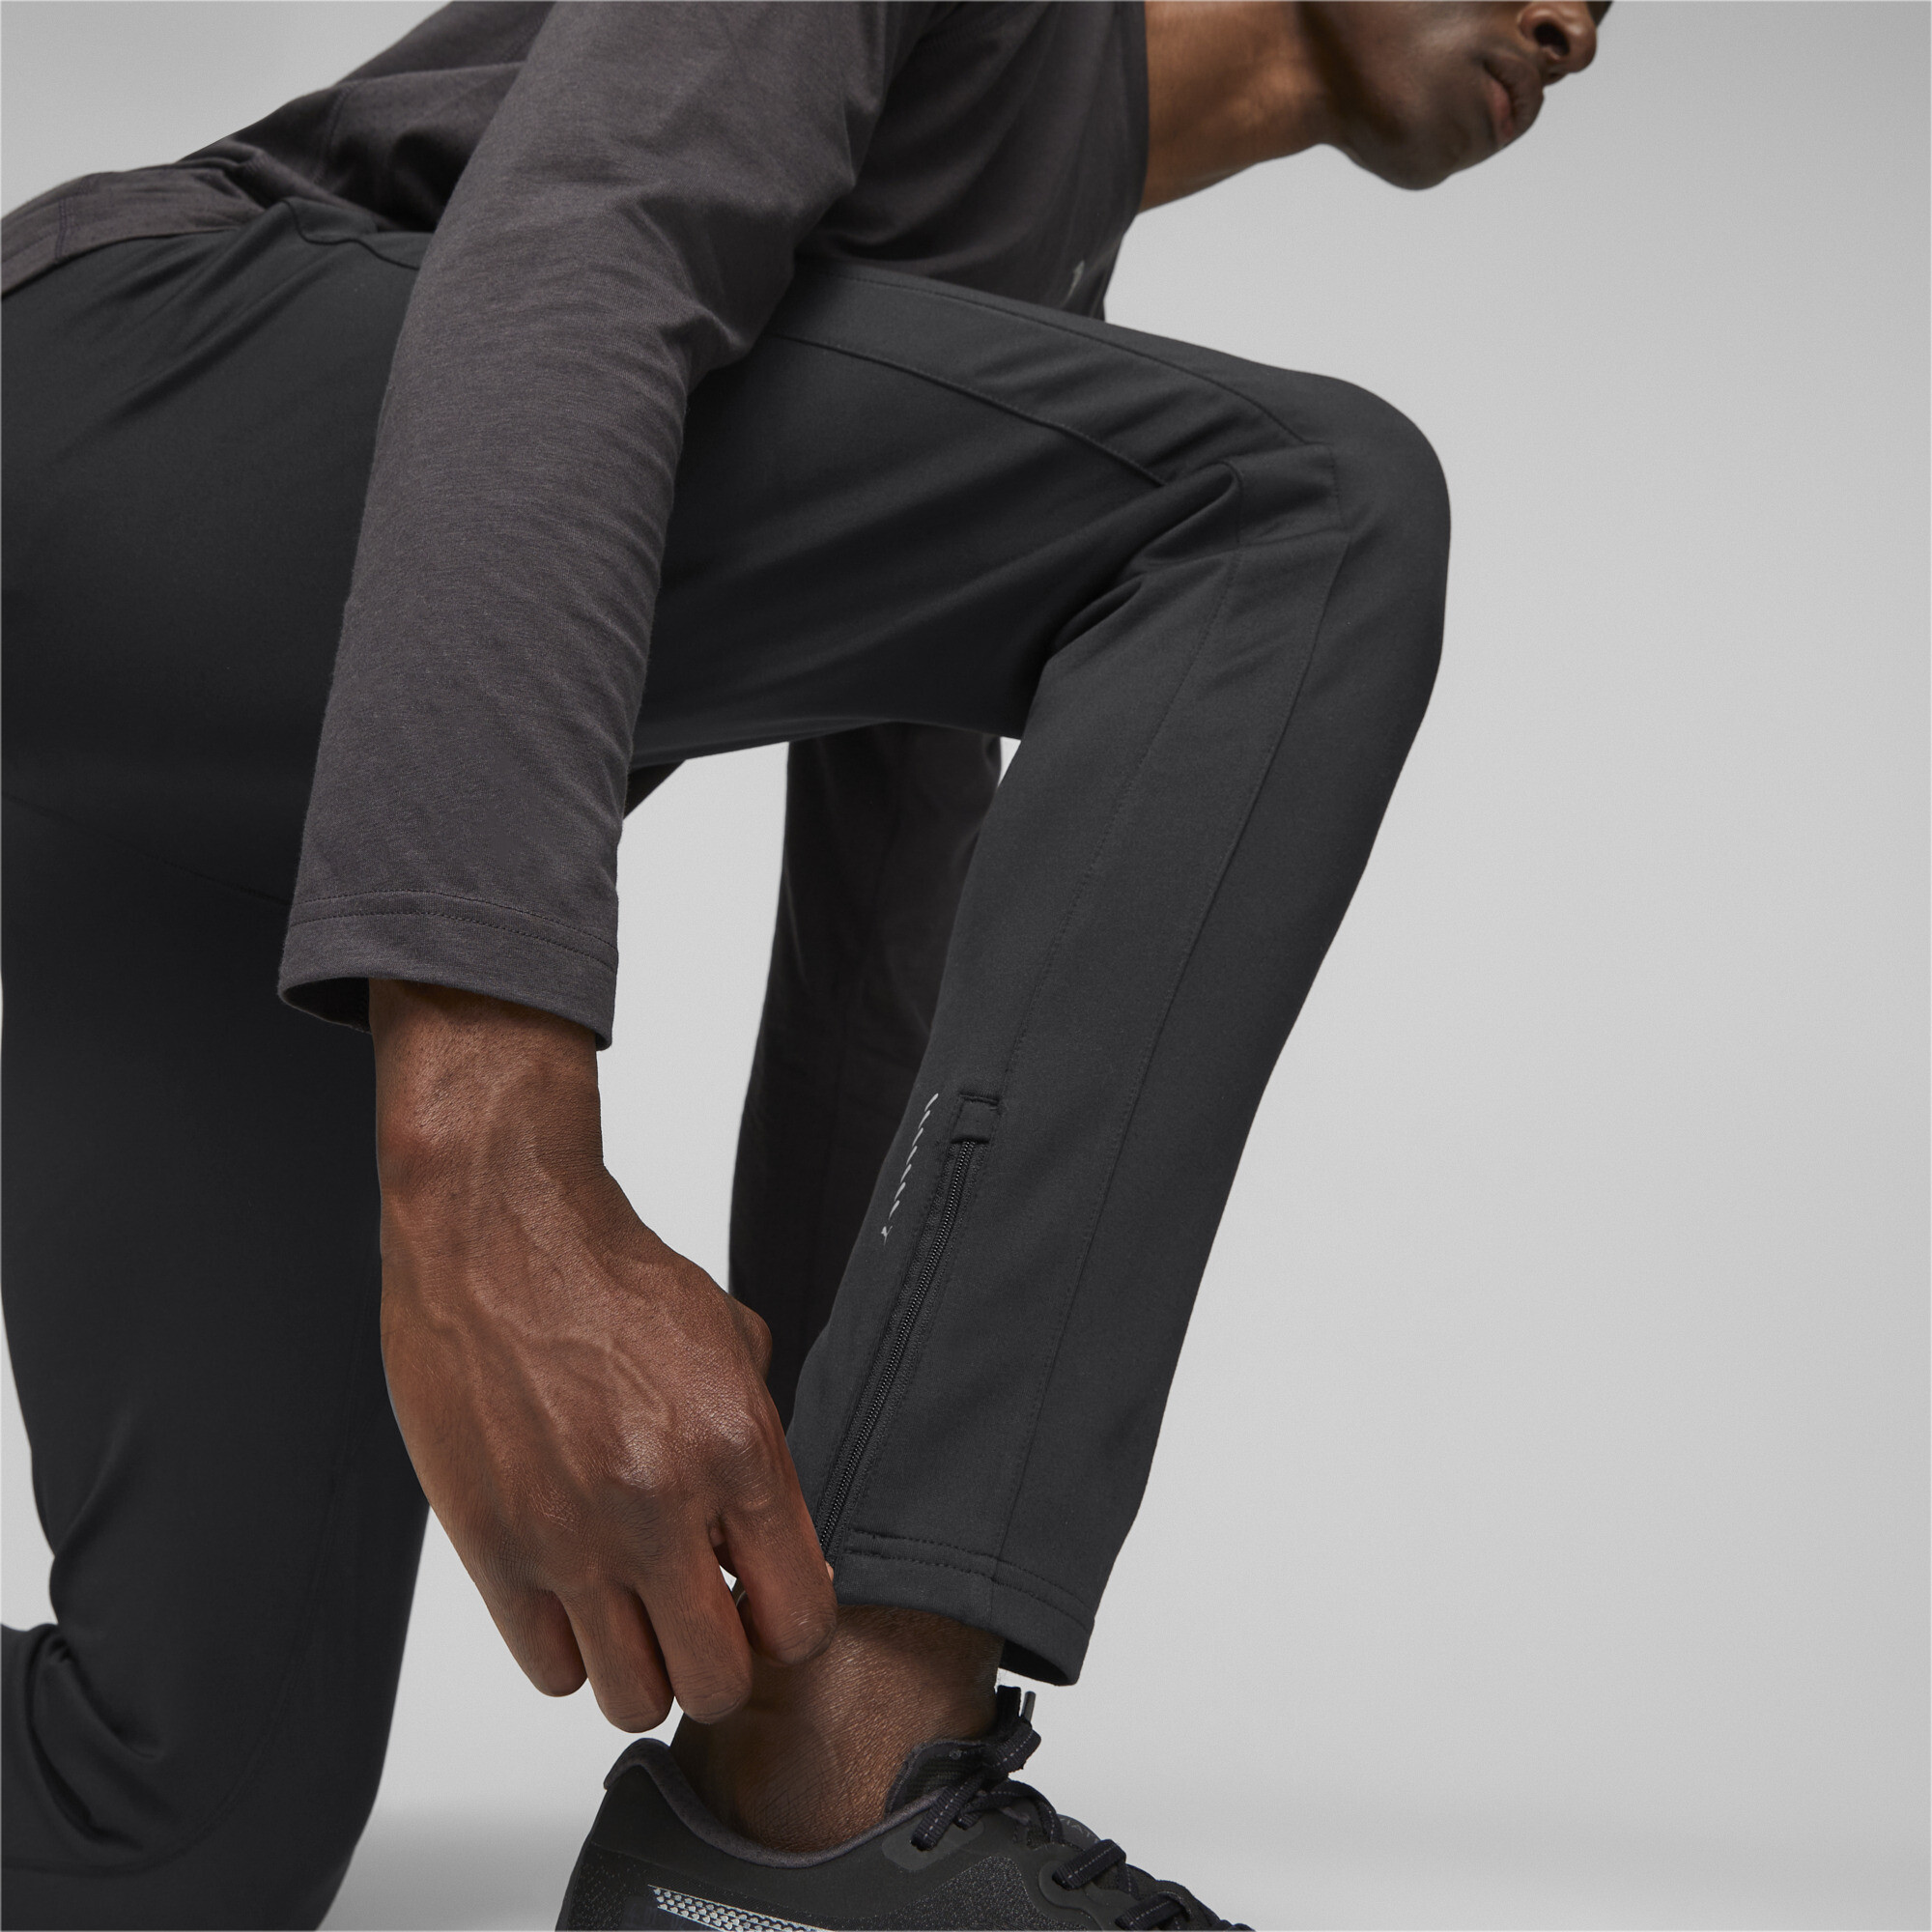 Men's Puma RUN CLOUDSPUN's Running Pants, Black, Size S, Clothing